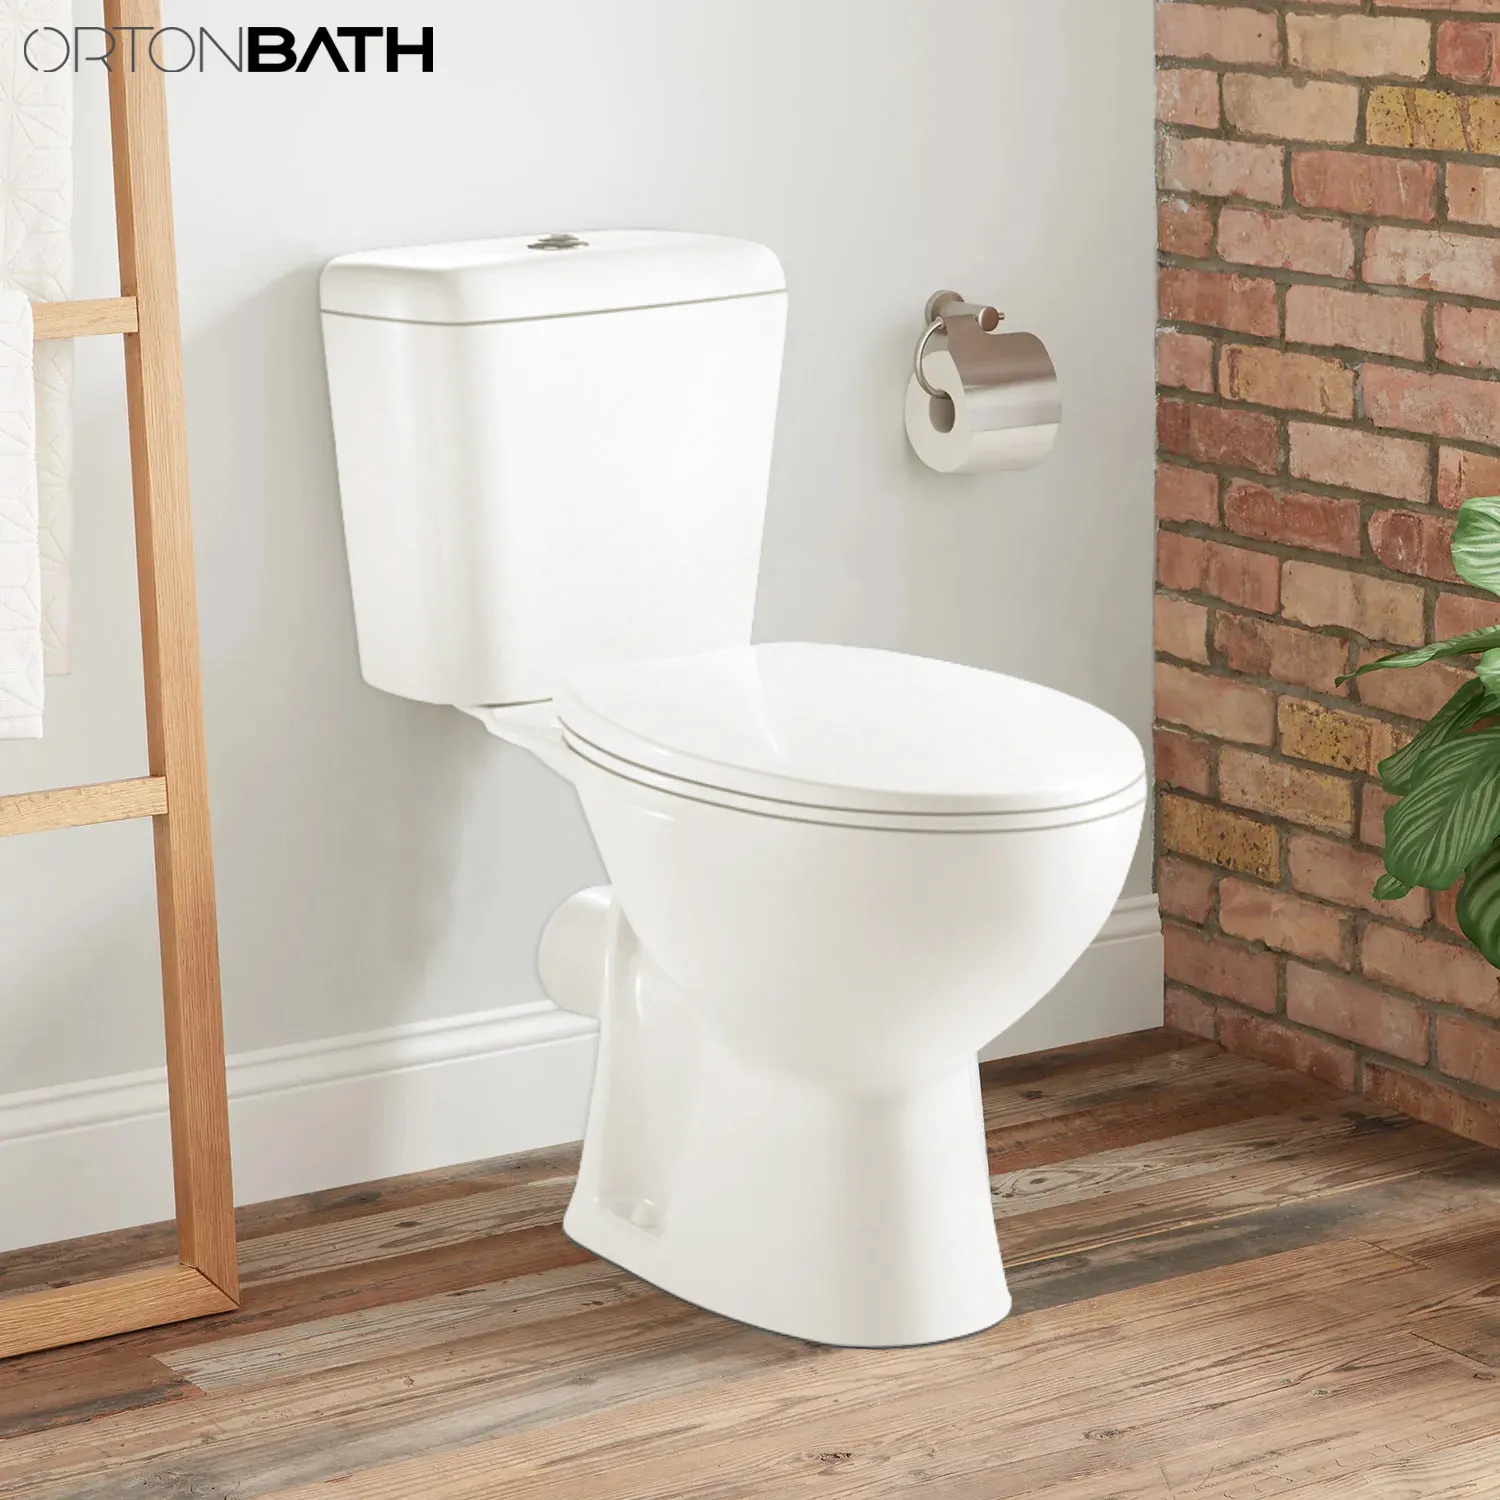 ORTONBATHS TWO PIECE XP TRAP Ceramic Toilet UF Toilet Seat OVAL toilet bowl 2 PIECE COMBO ECONOMICAL MODEL